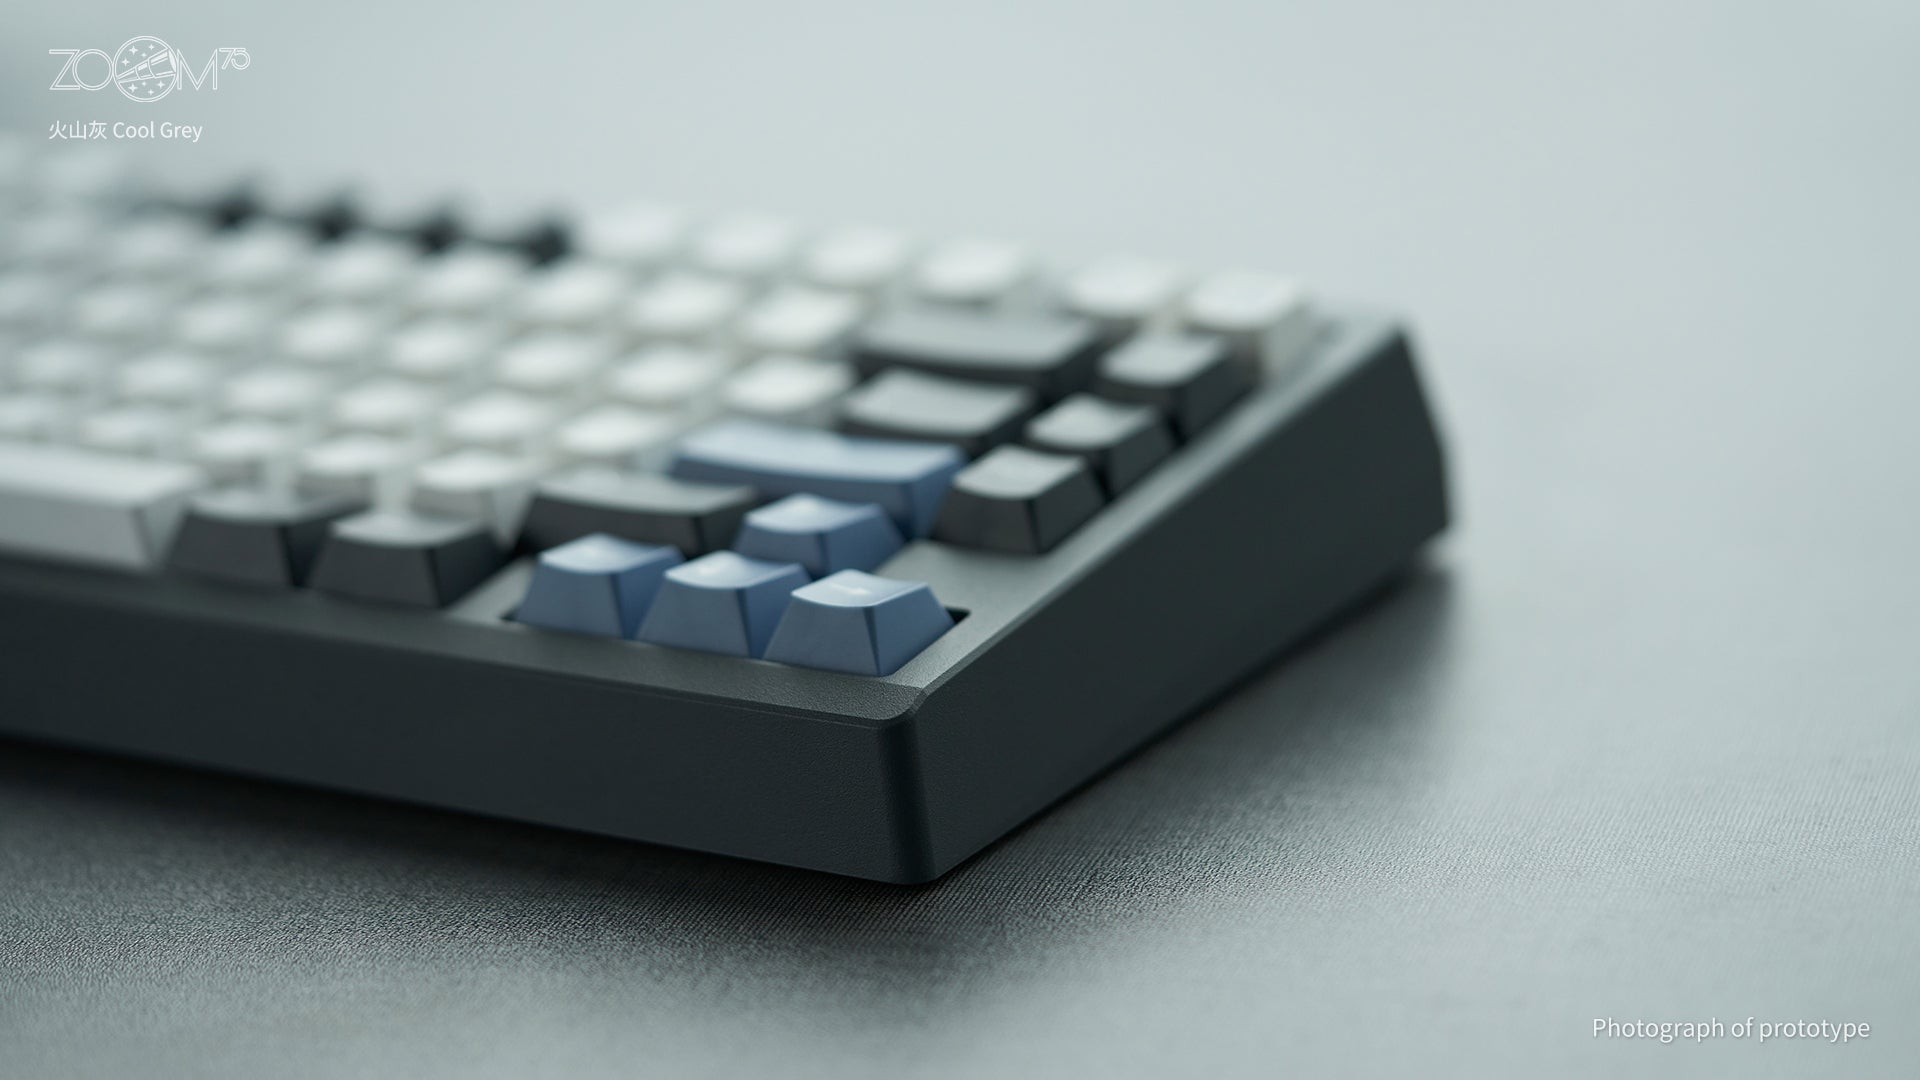 [Group-Buy] Meletrix Zoom75 Essential Edition (EE) - Barebones Keyboard Kit - Cool Grey